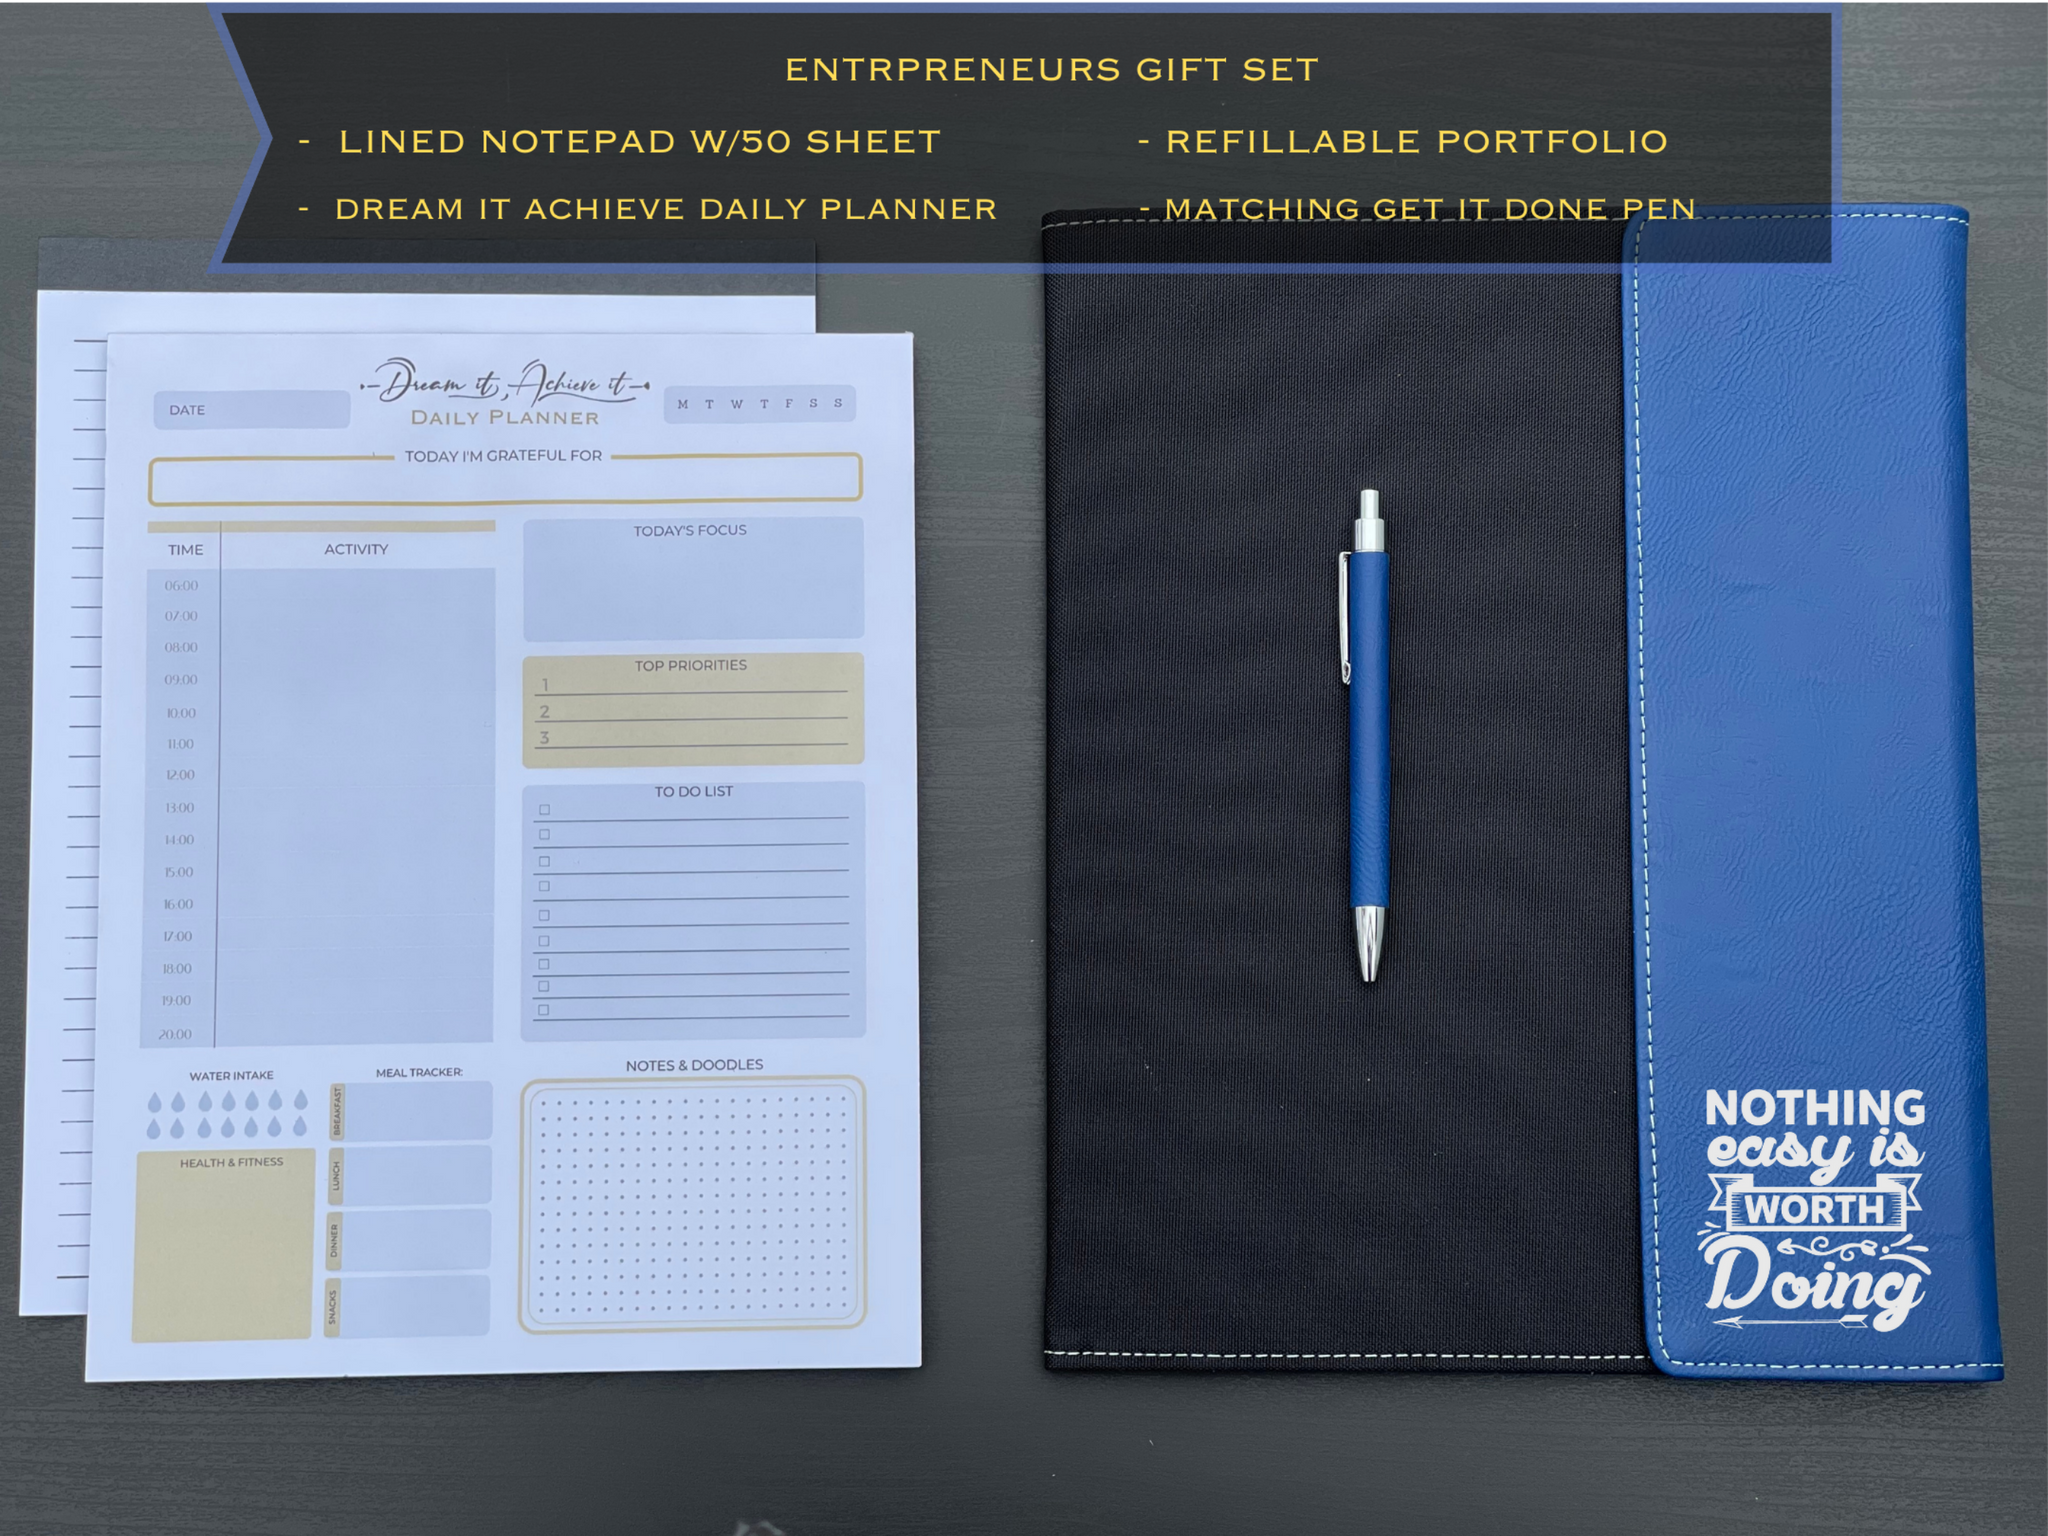 Personalized Refillable Portfolio For Entrepreneurs